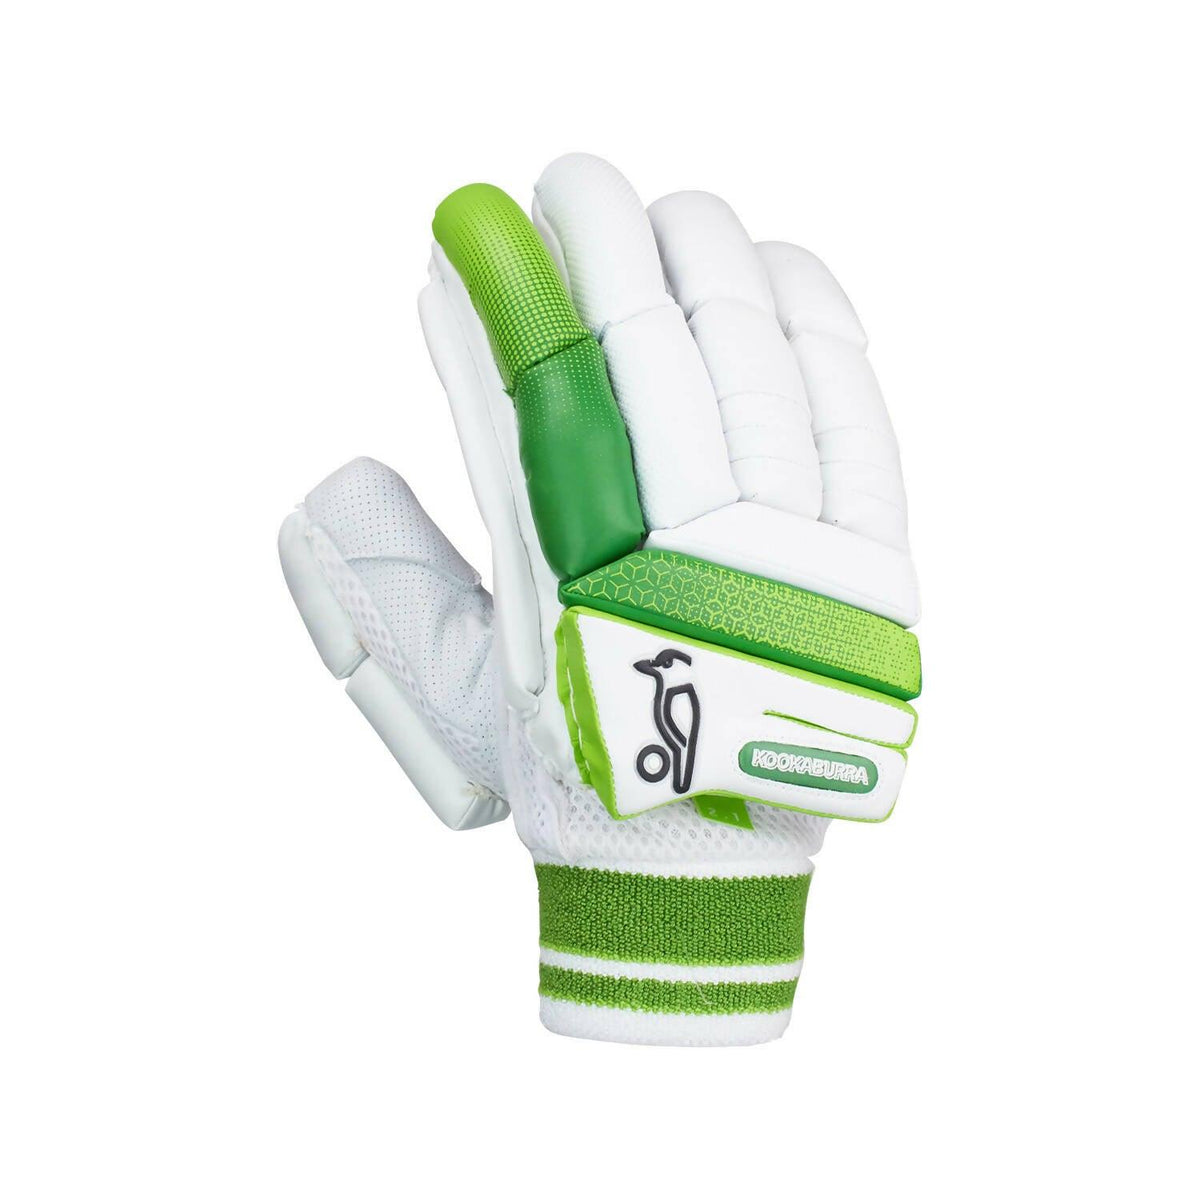 Premium Quality Batting Gloves - Professional & Club Cricket Standard - ValueBox